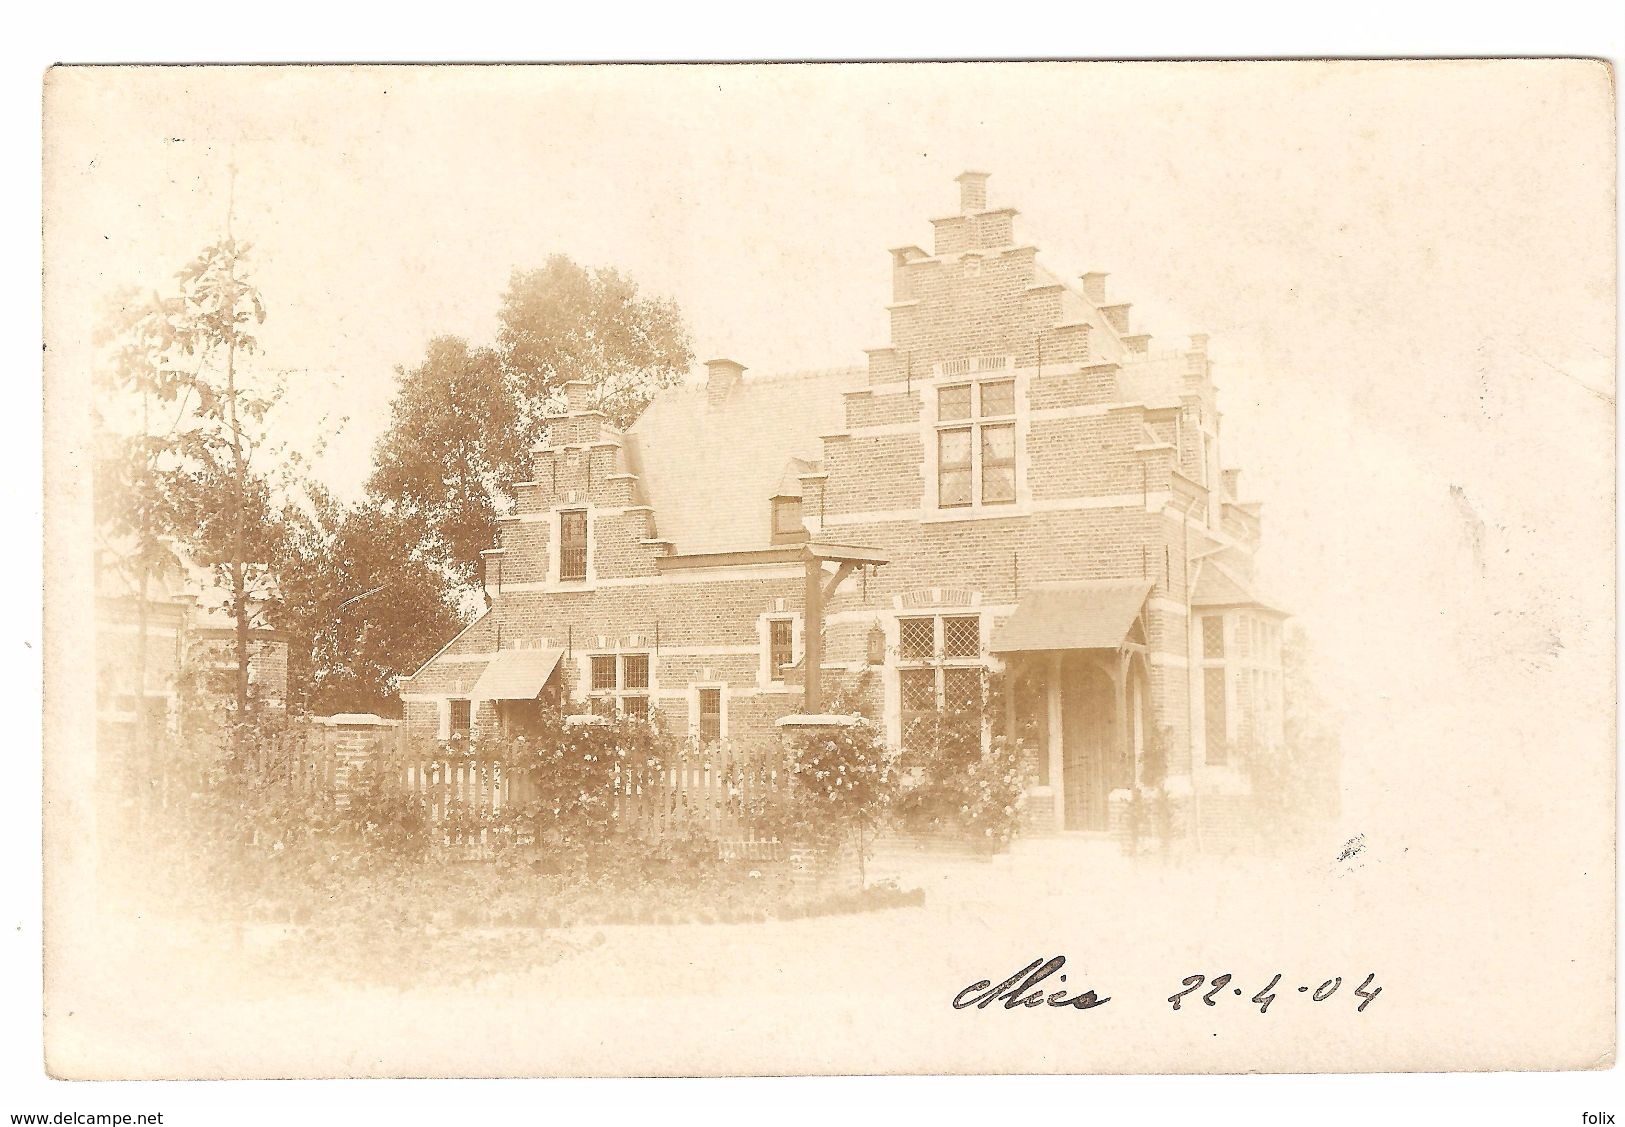 Gent - Originele Fotokaart - 1904 - Stempel Gand (Station) - Mandats - Enkele Rug - Gent